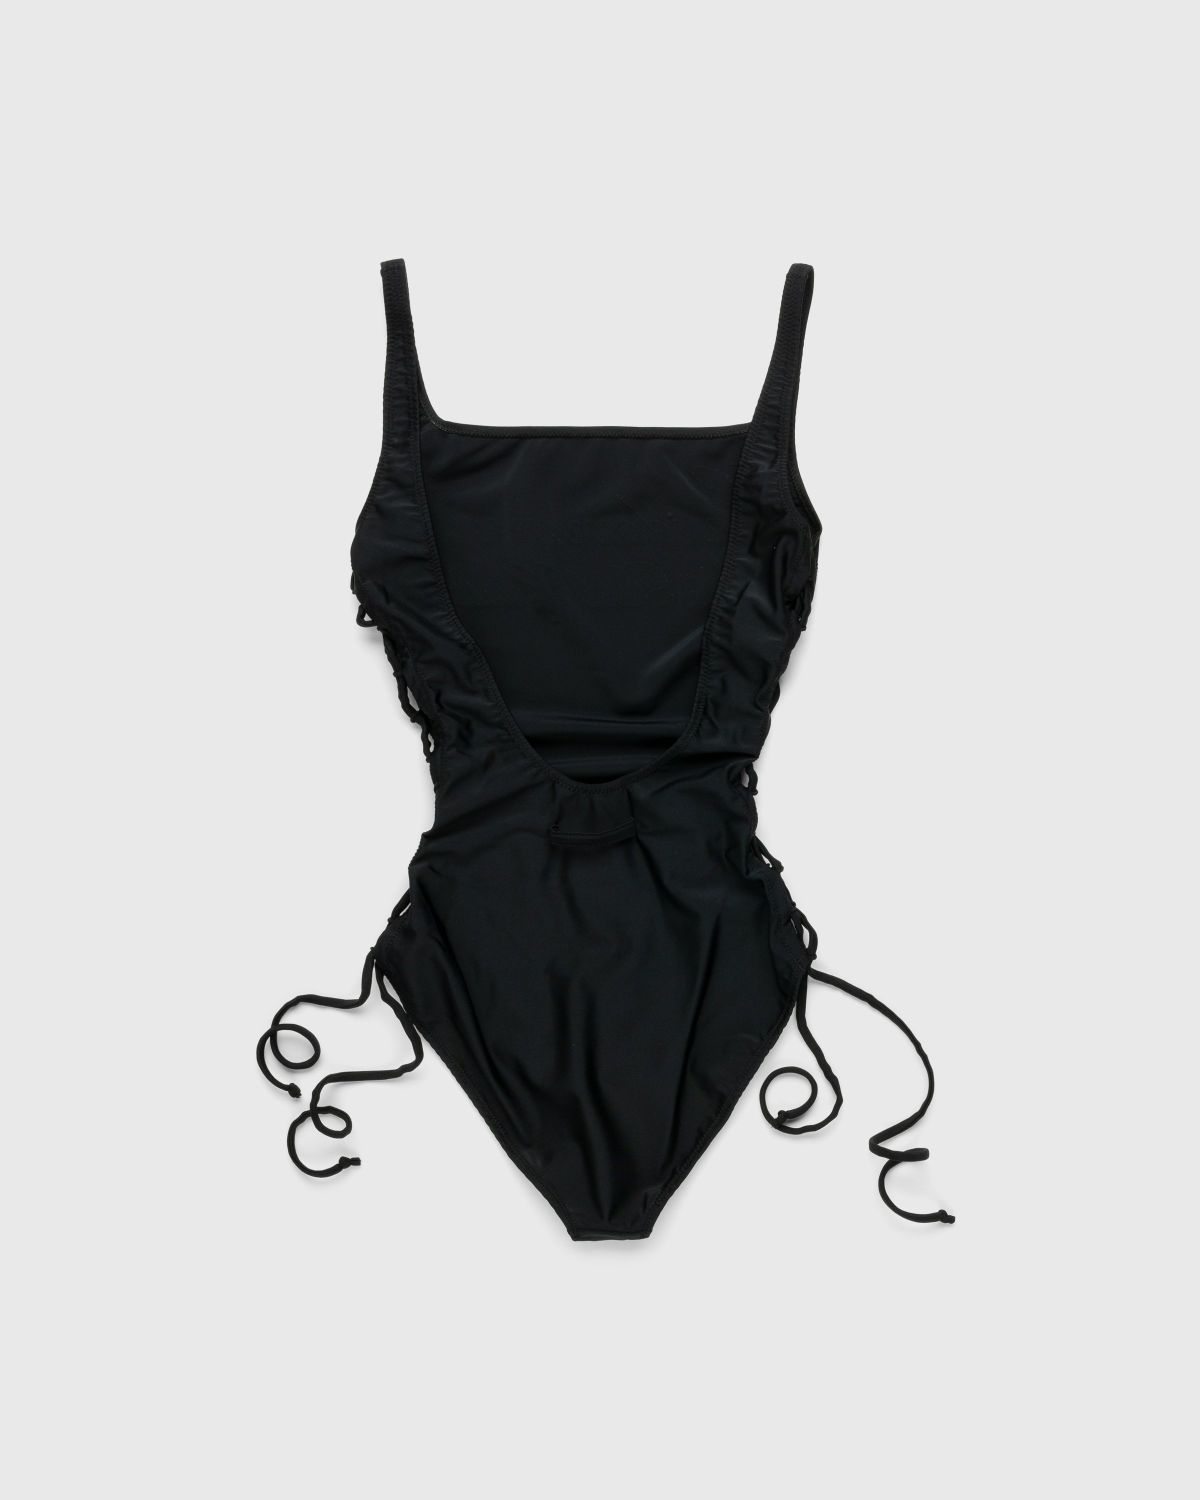 Jean Paul Gaultier – Évidemment Swimsuit Black - Swimwear - Black - Image 2